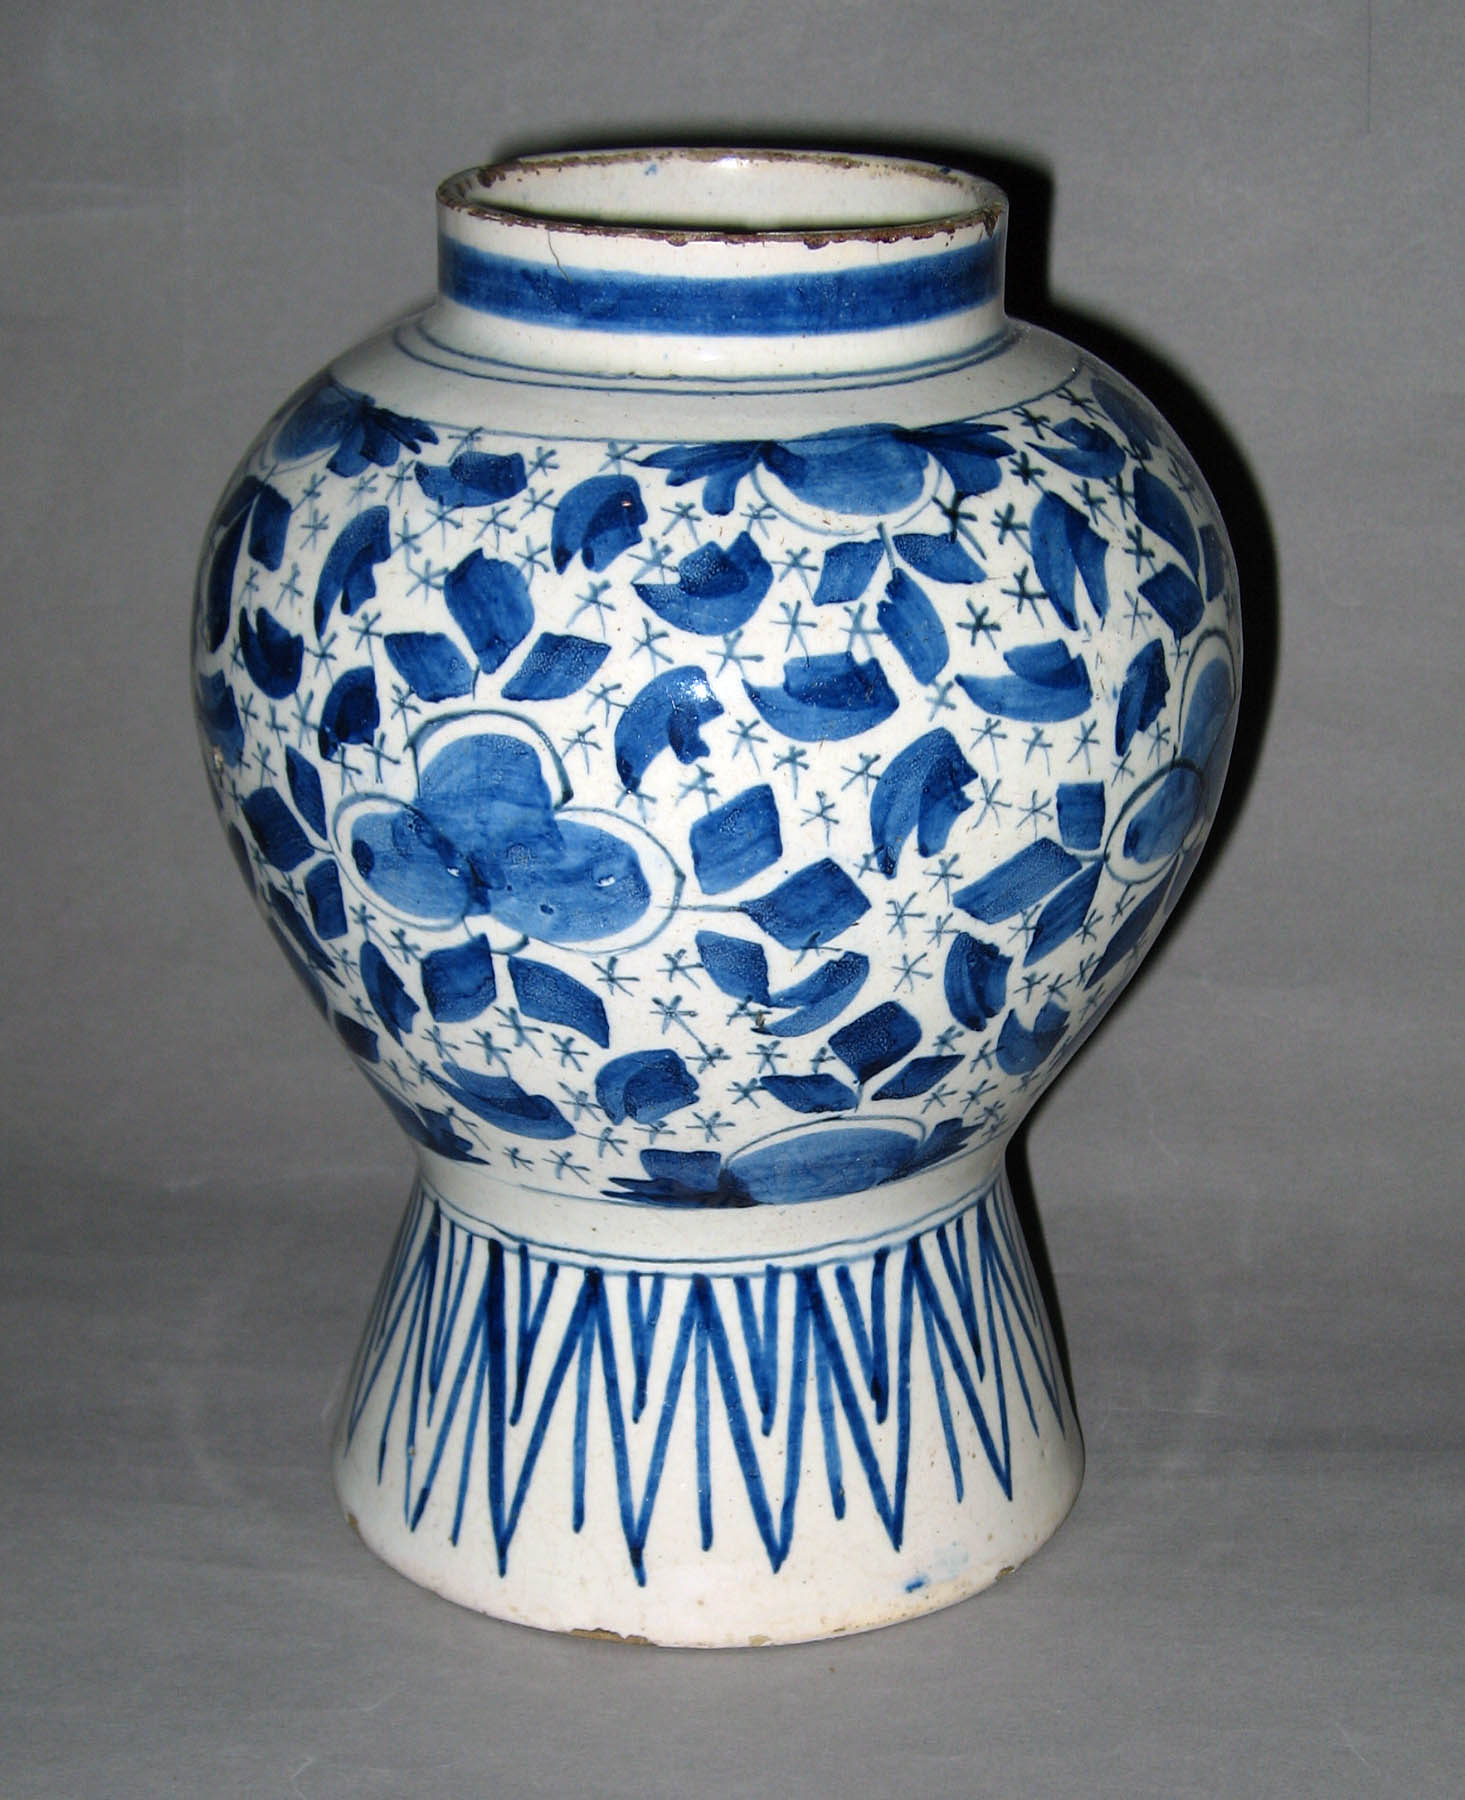 1958.1959 Delft vase